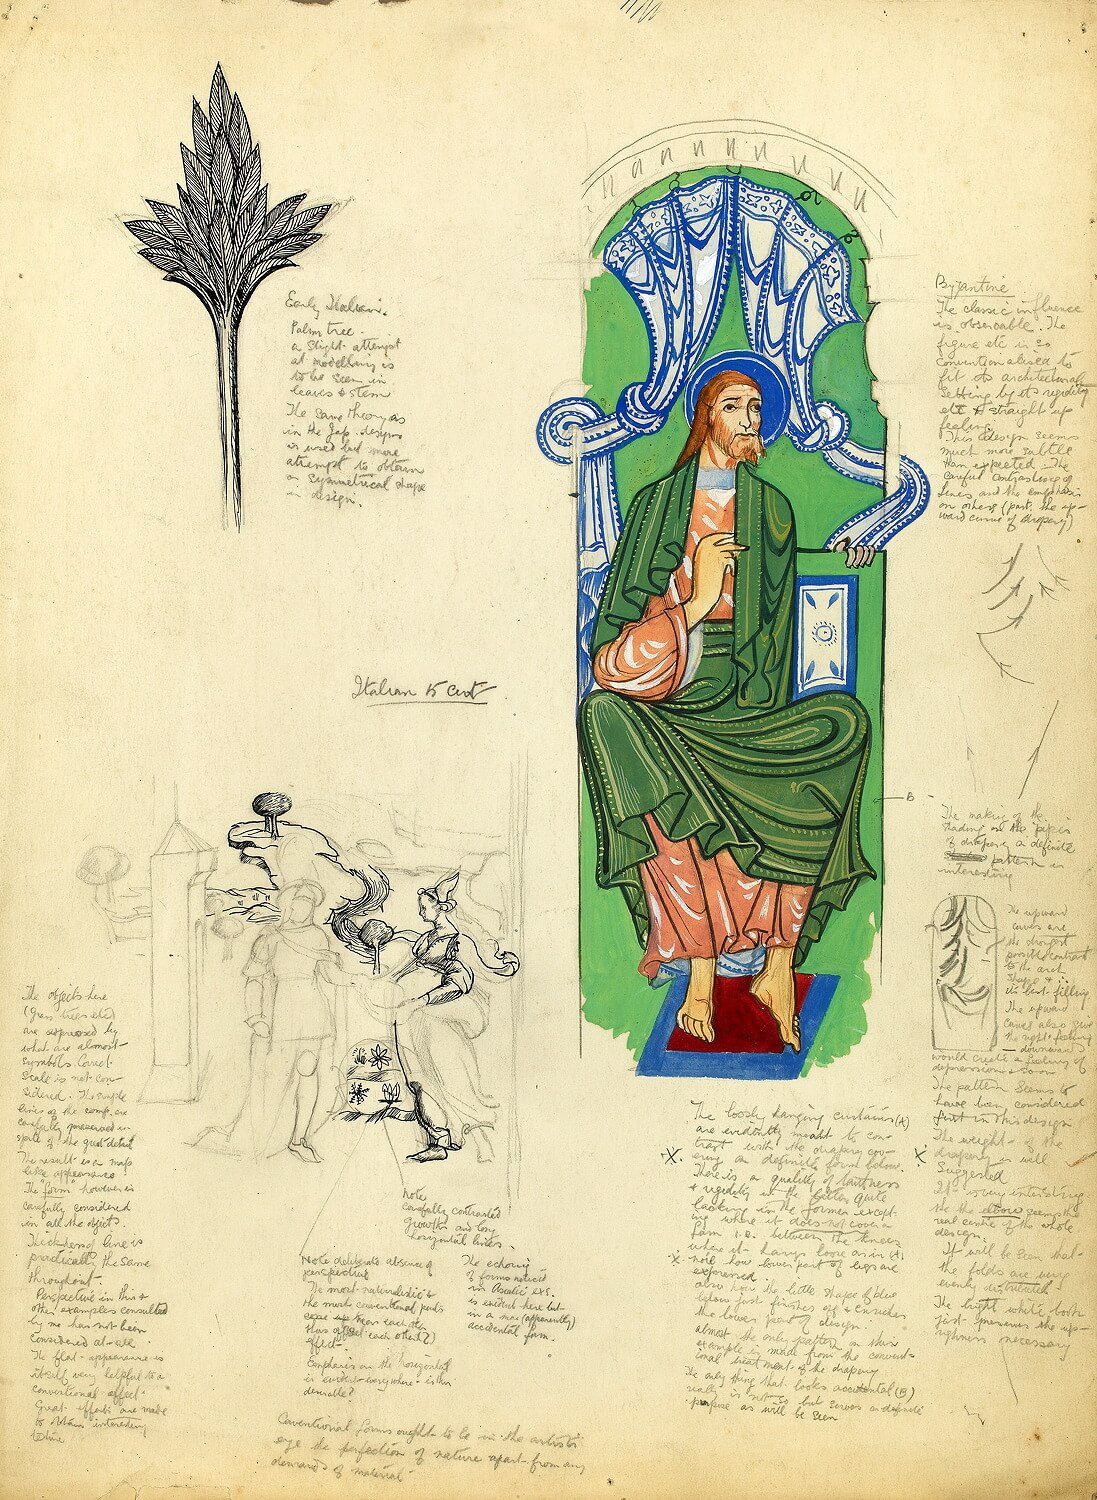 Alan Sorrell - Sheet of studies of an illustminated manuscript